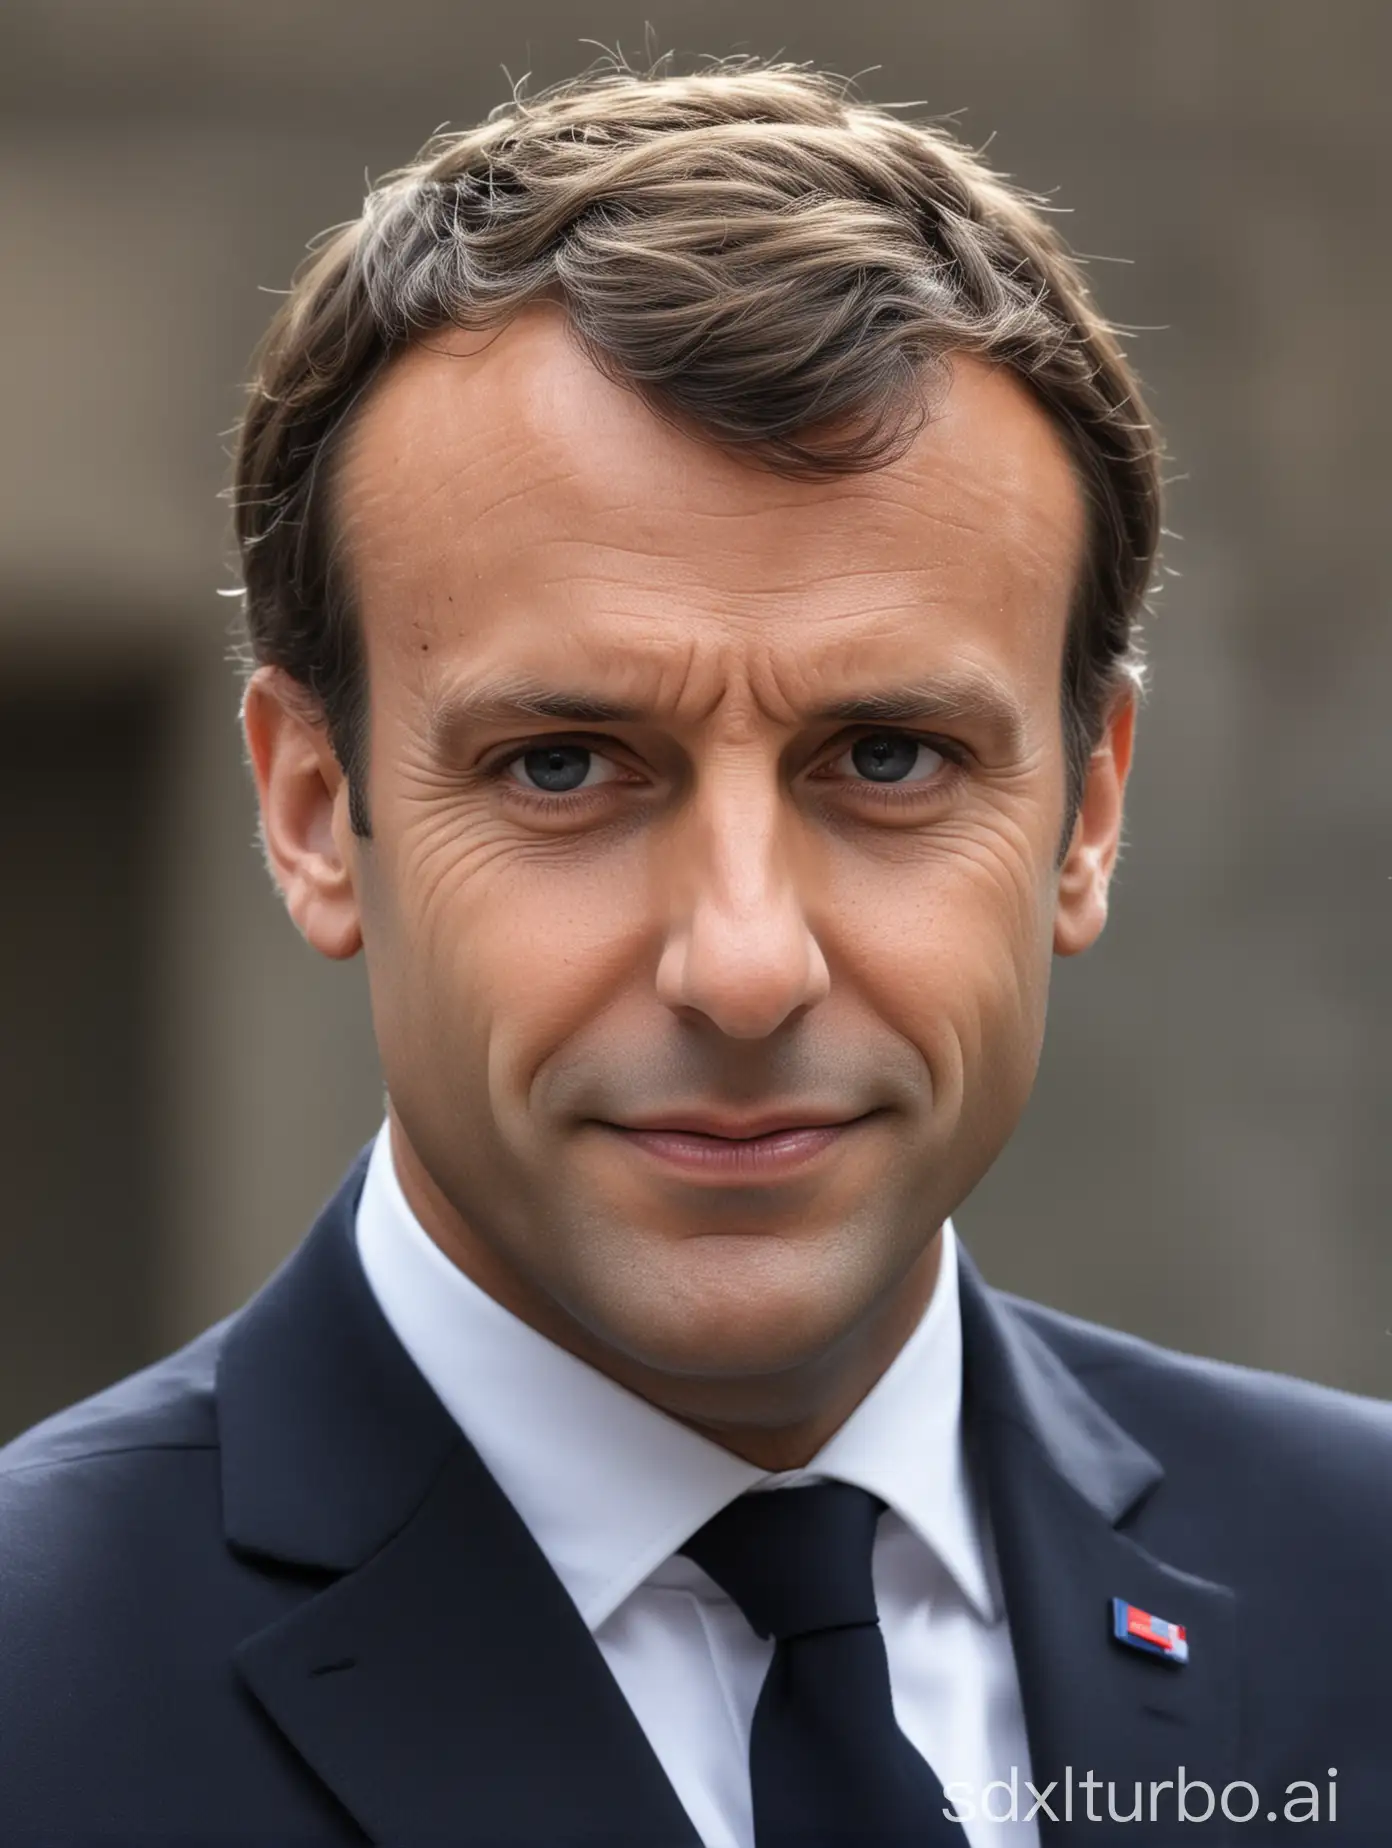 The french president Emmanuel Macron